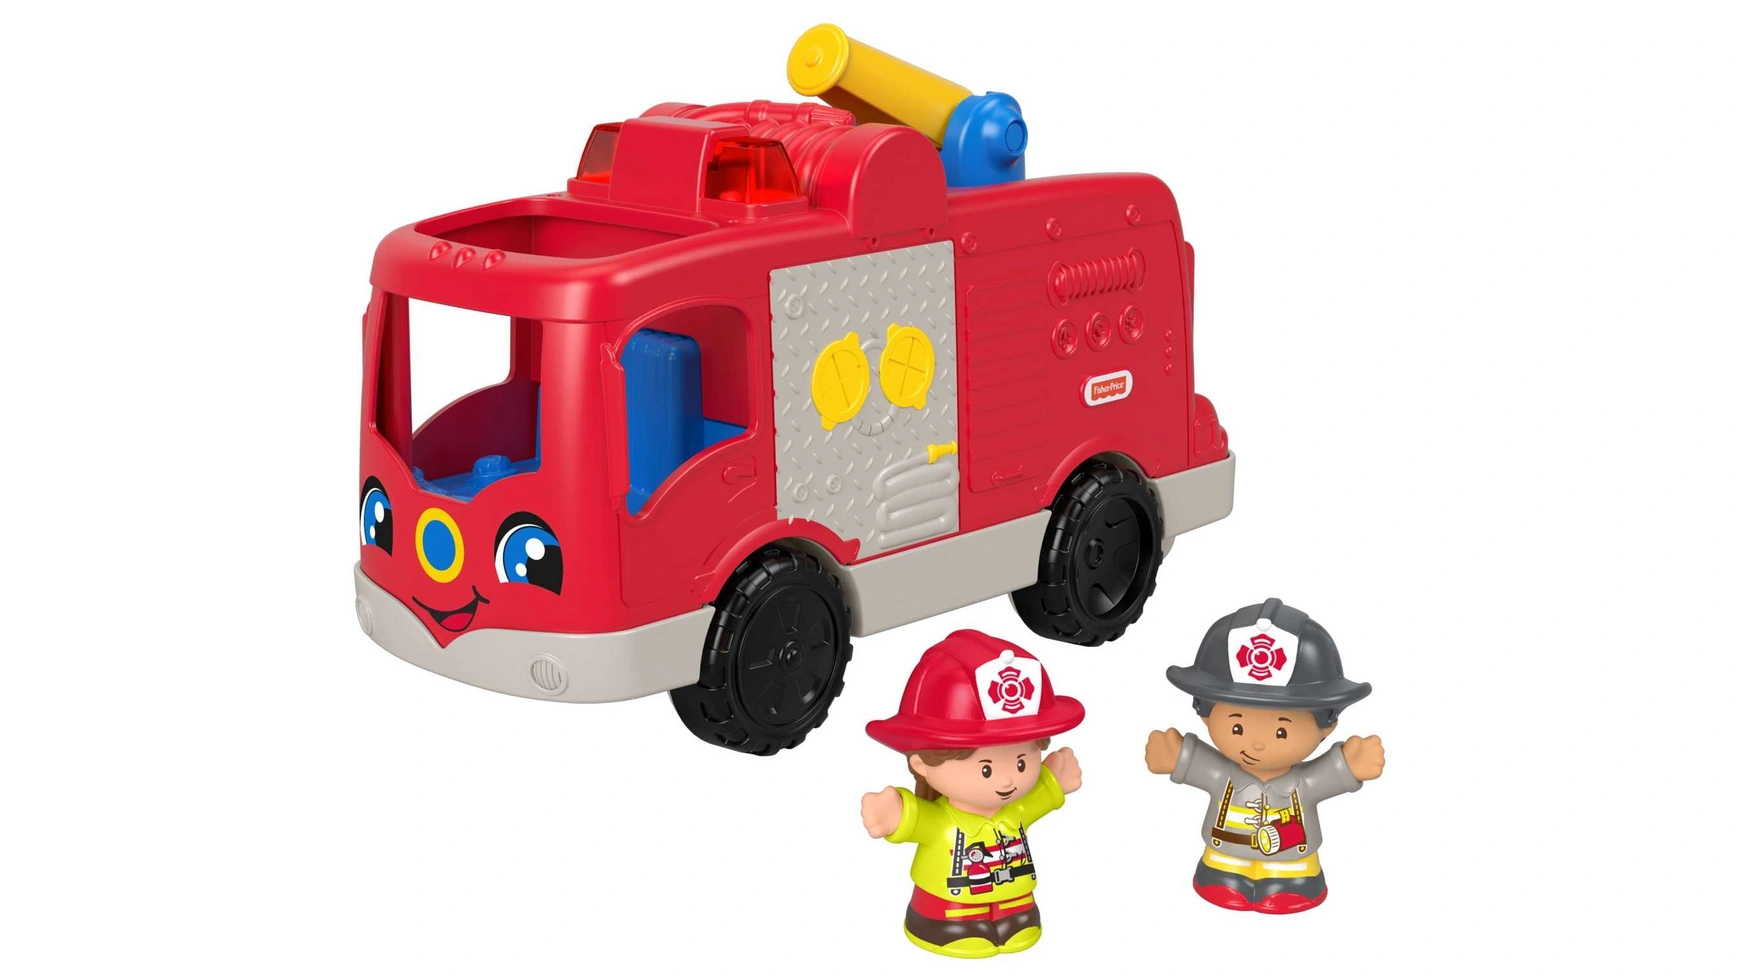 Пожарная машина Fisher Price Little People с фигурками, обучающая игрушка